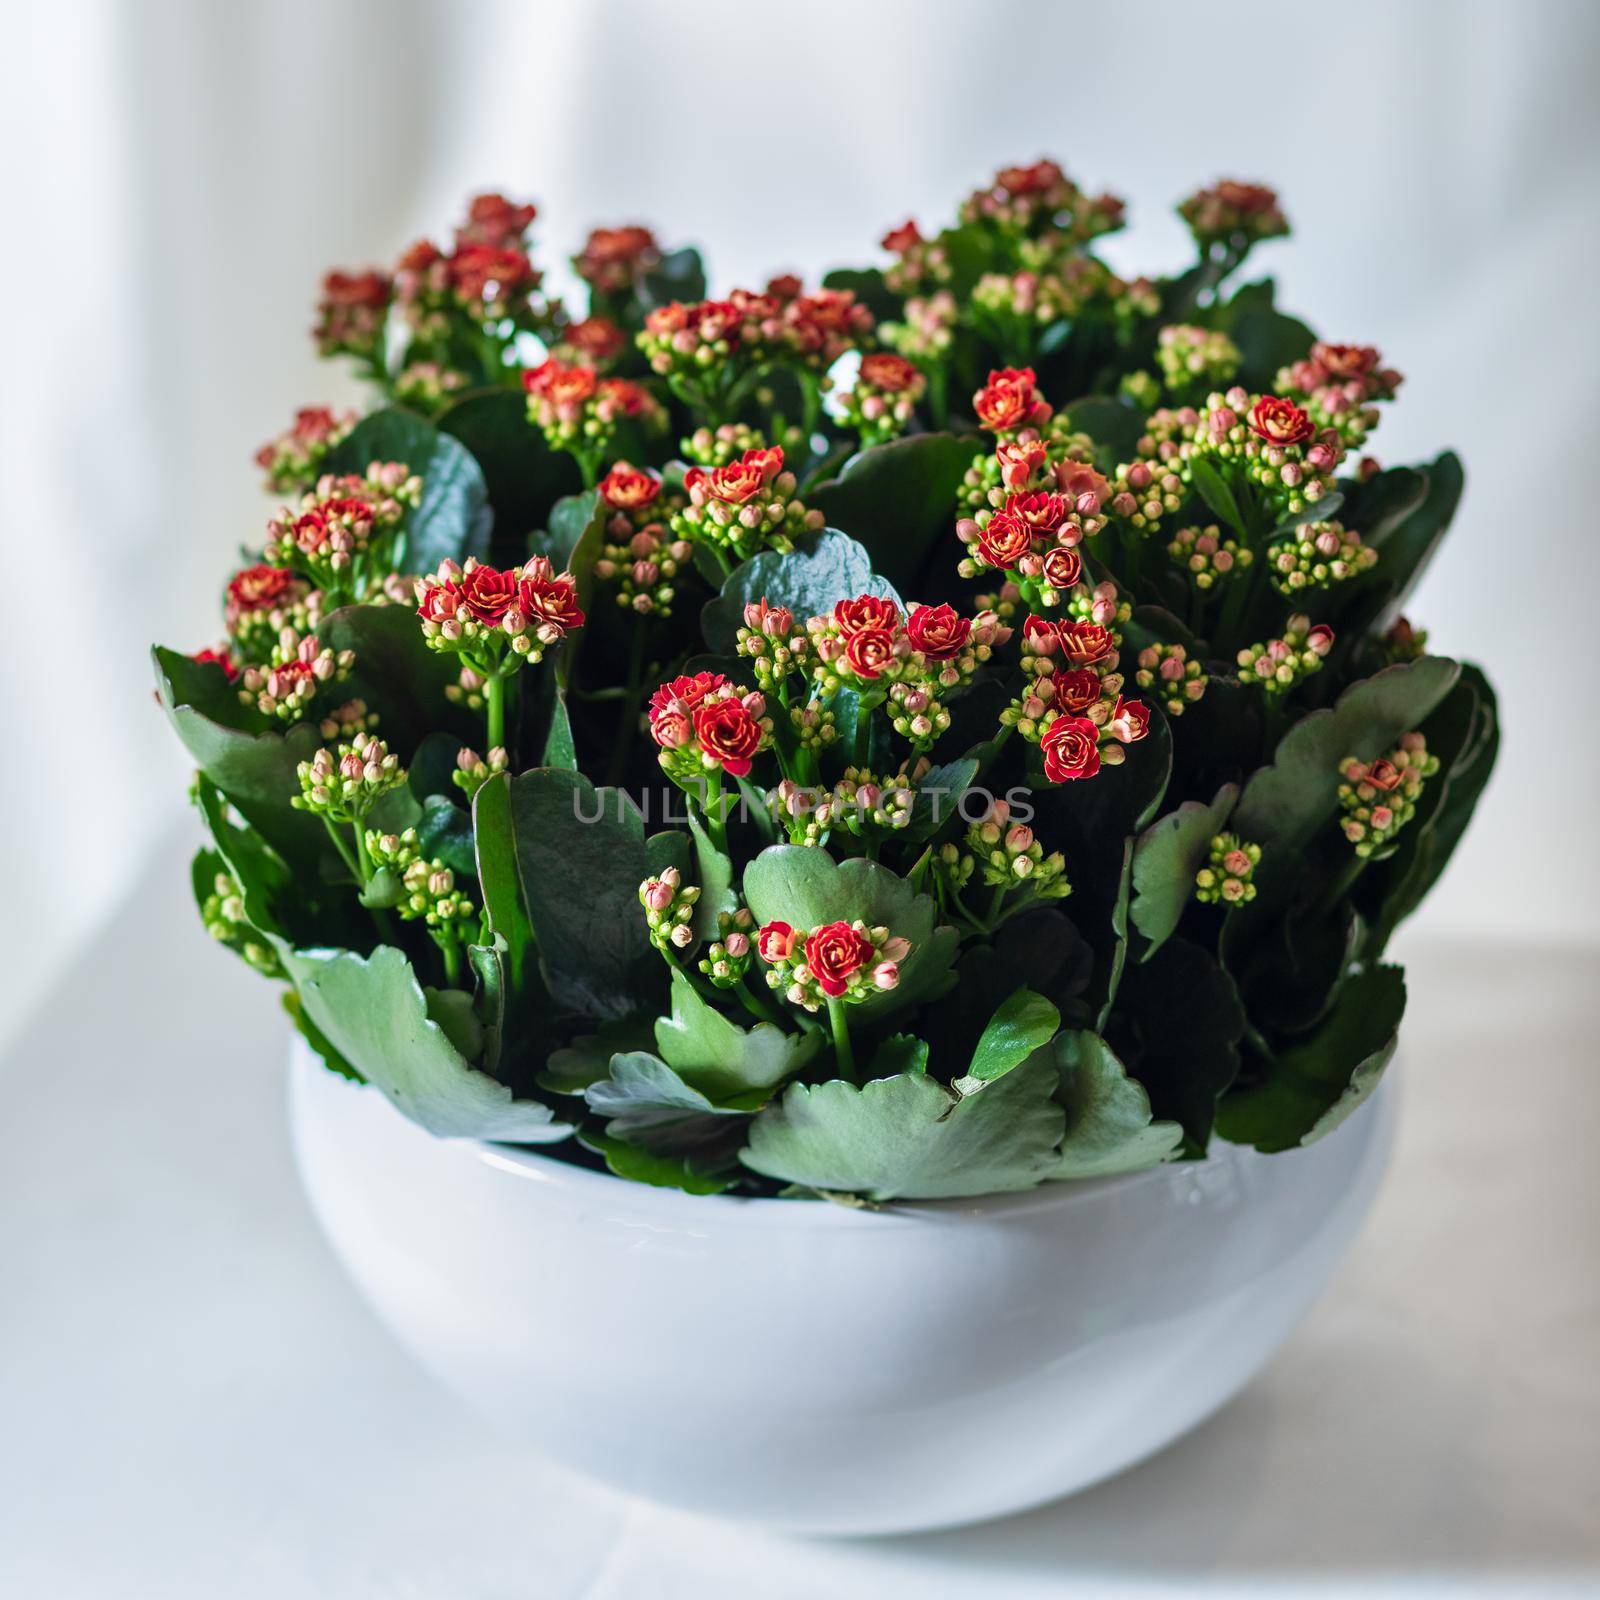 Colorful Lantana camara flower plant in the white pot